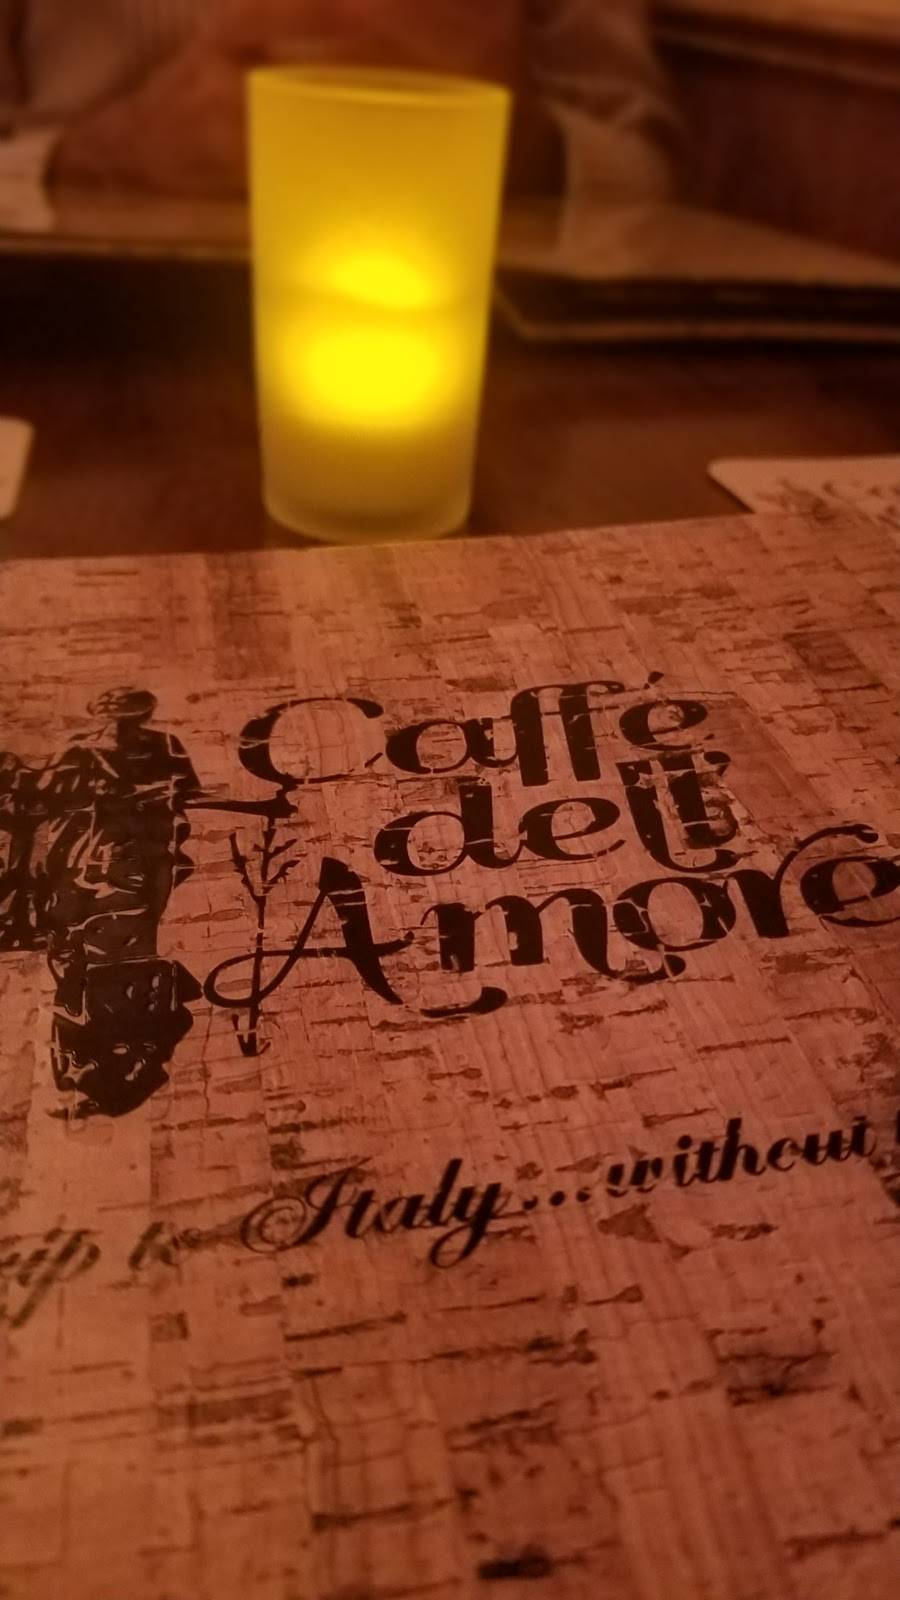 Caffe dellAmore | restaurant | 1400 Gulf Shore Blvd N Ste 154, Naples, FL 34102, USA | 2392611389 OR +1 239-261-1389